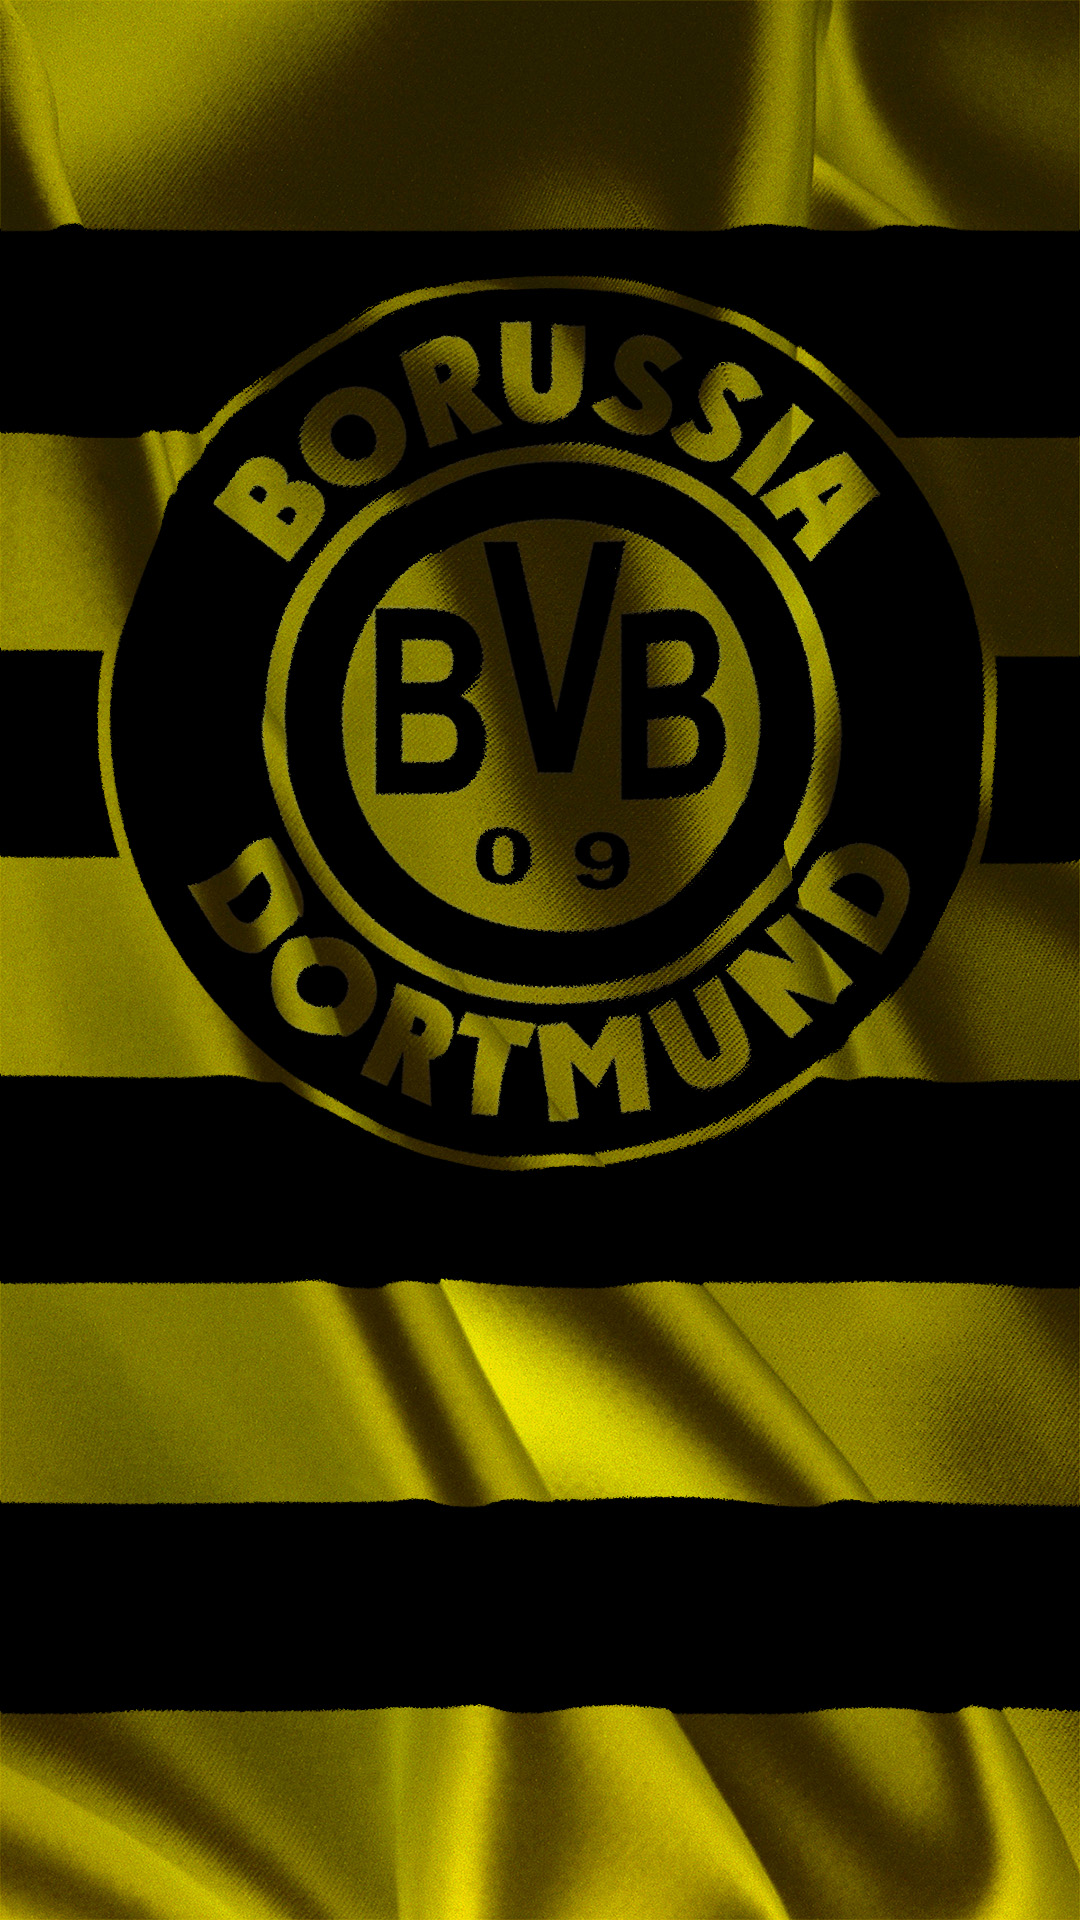 BVB 09 - Borussia Dortmund - Bilder